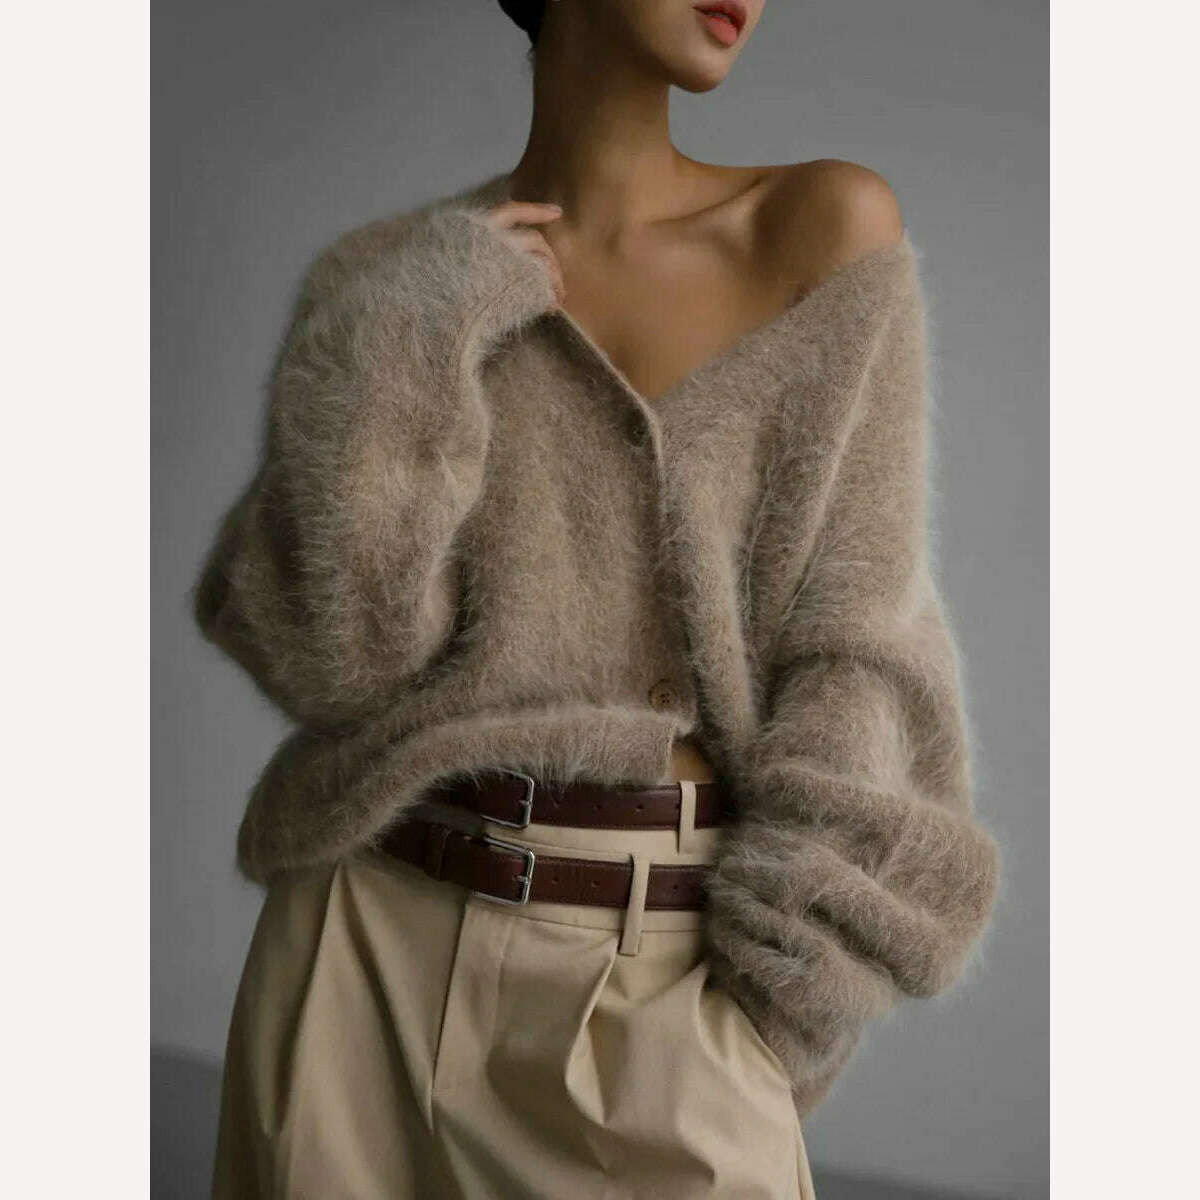 KIMLUD, Hirsionsan Elegant Long Sleeve Sweater Women 2023 New Single-Breasted Female Casual Cardigan Soft Flexible Knitted Outwear, Khaki / M, KIMLUD Womens Clothes